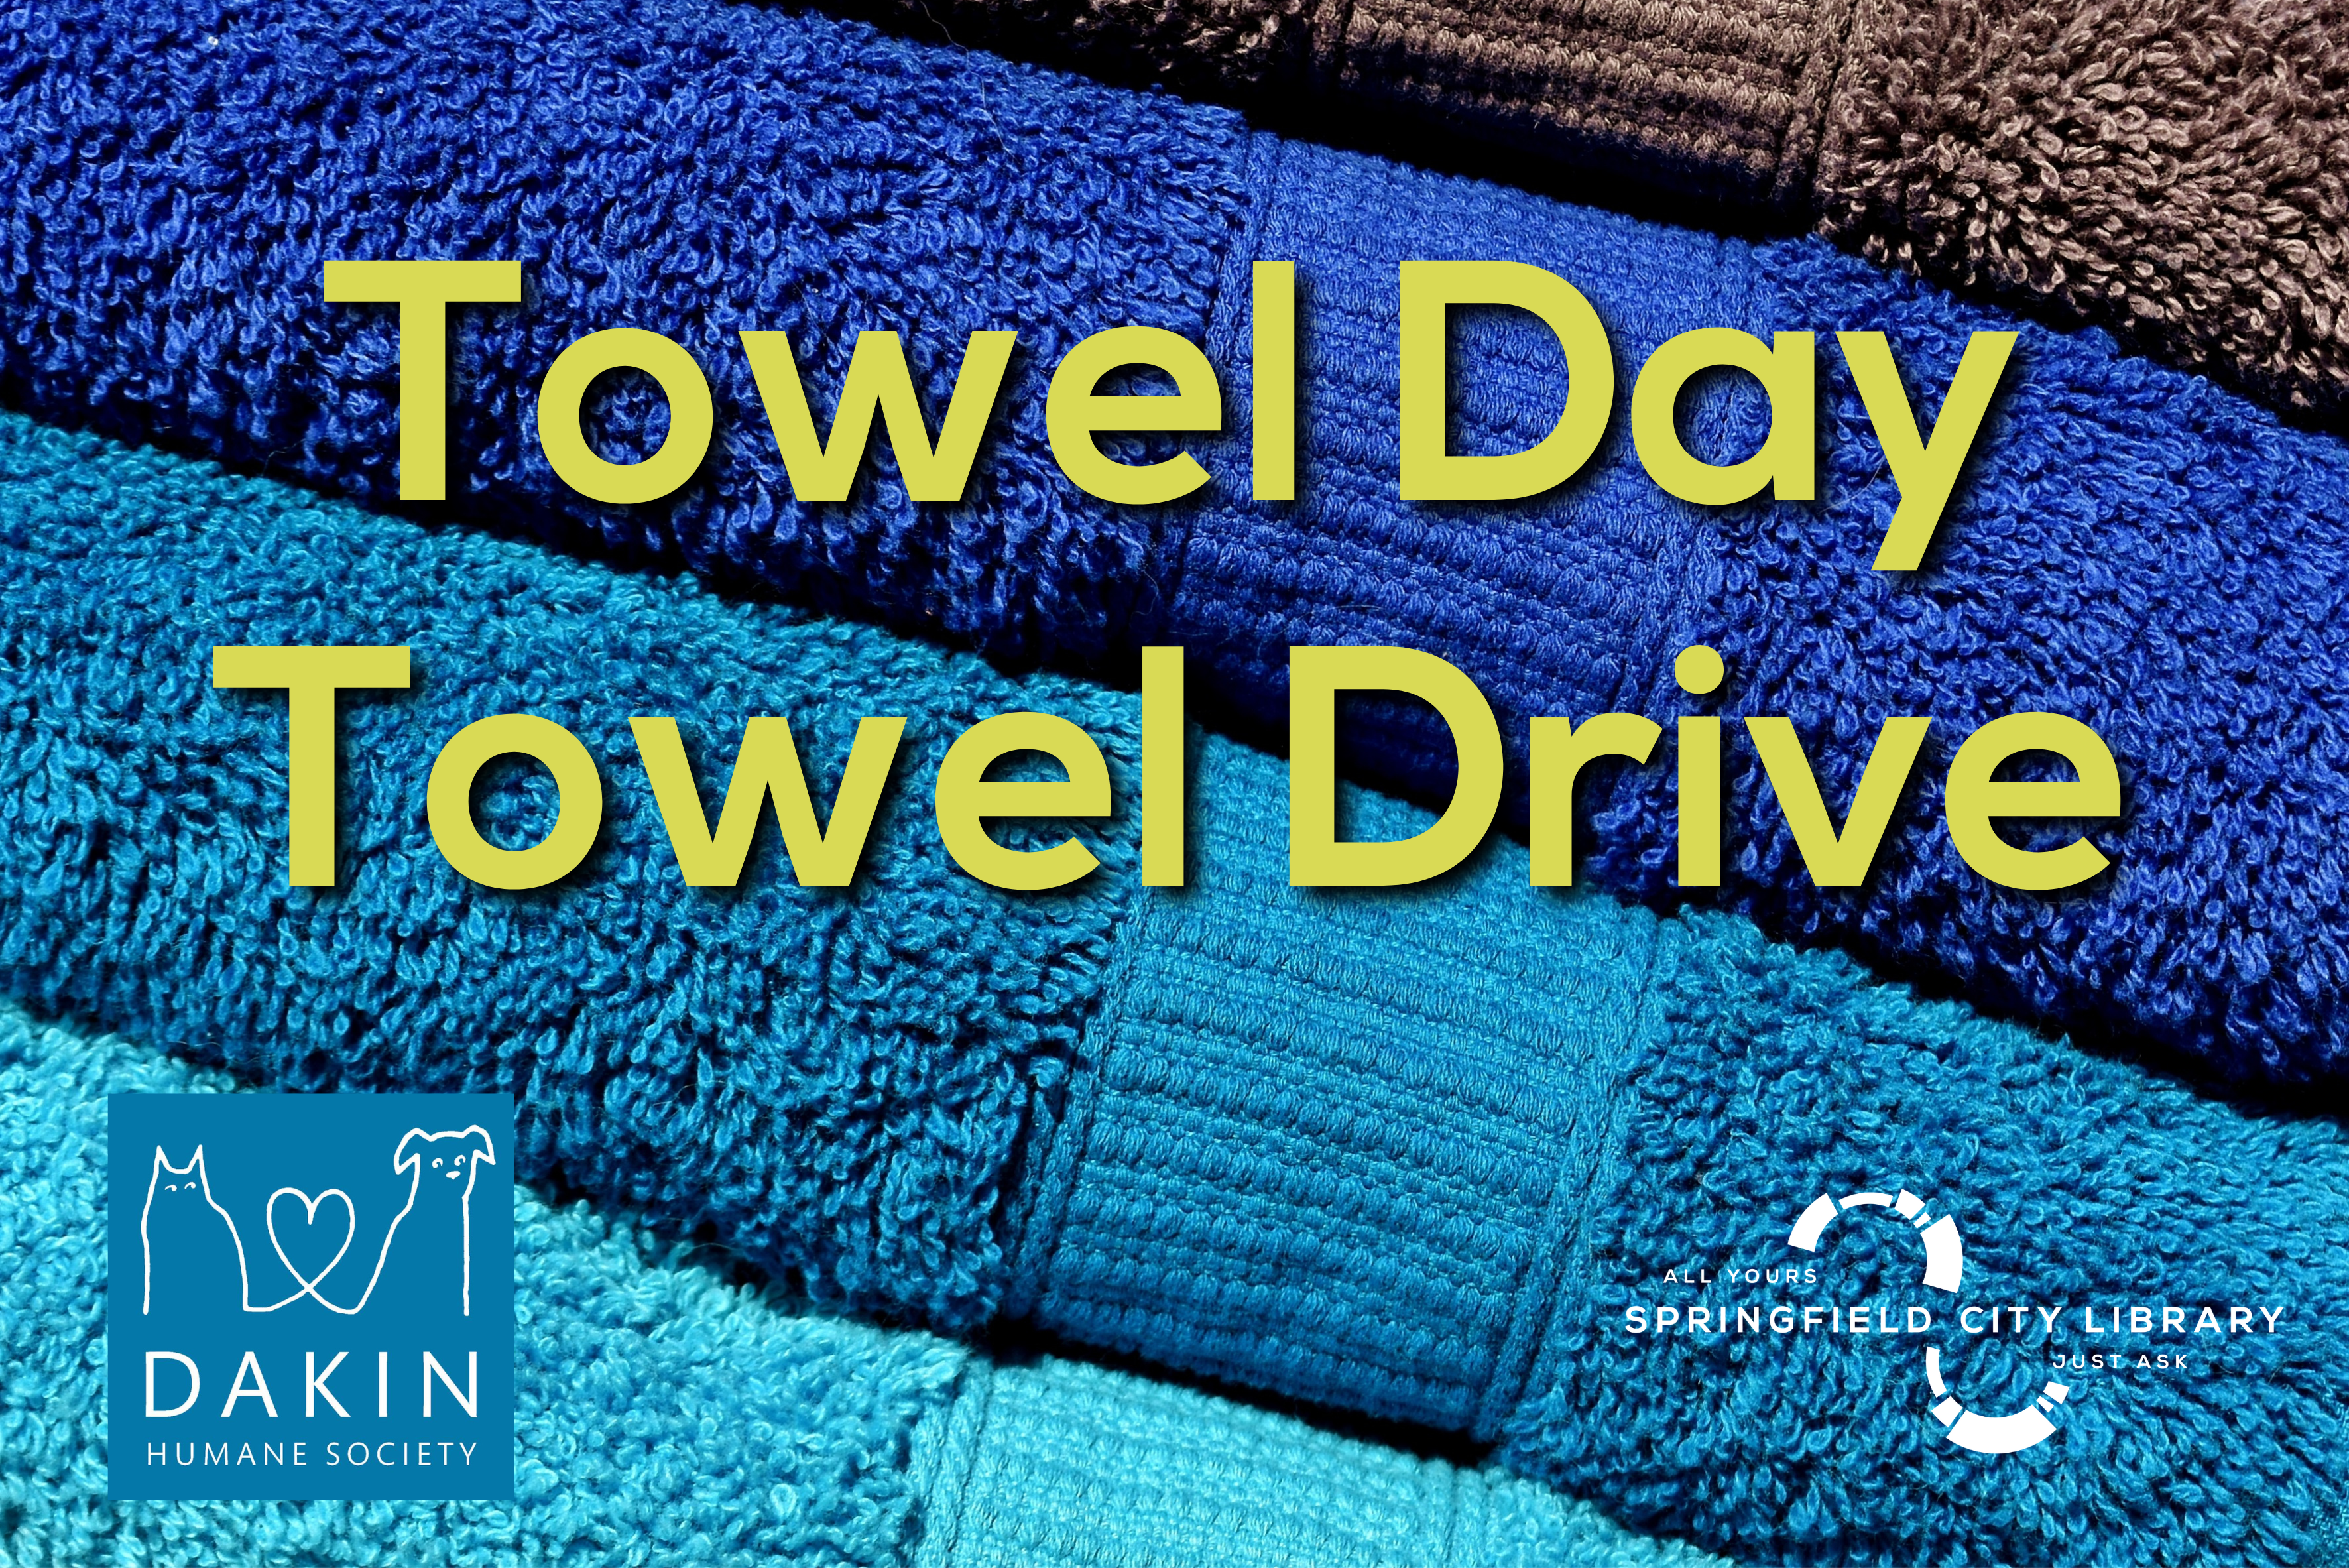 Towel Day Towel Drive